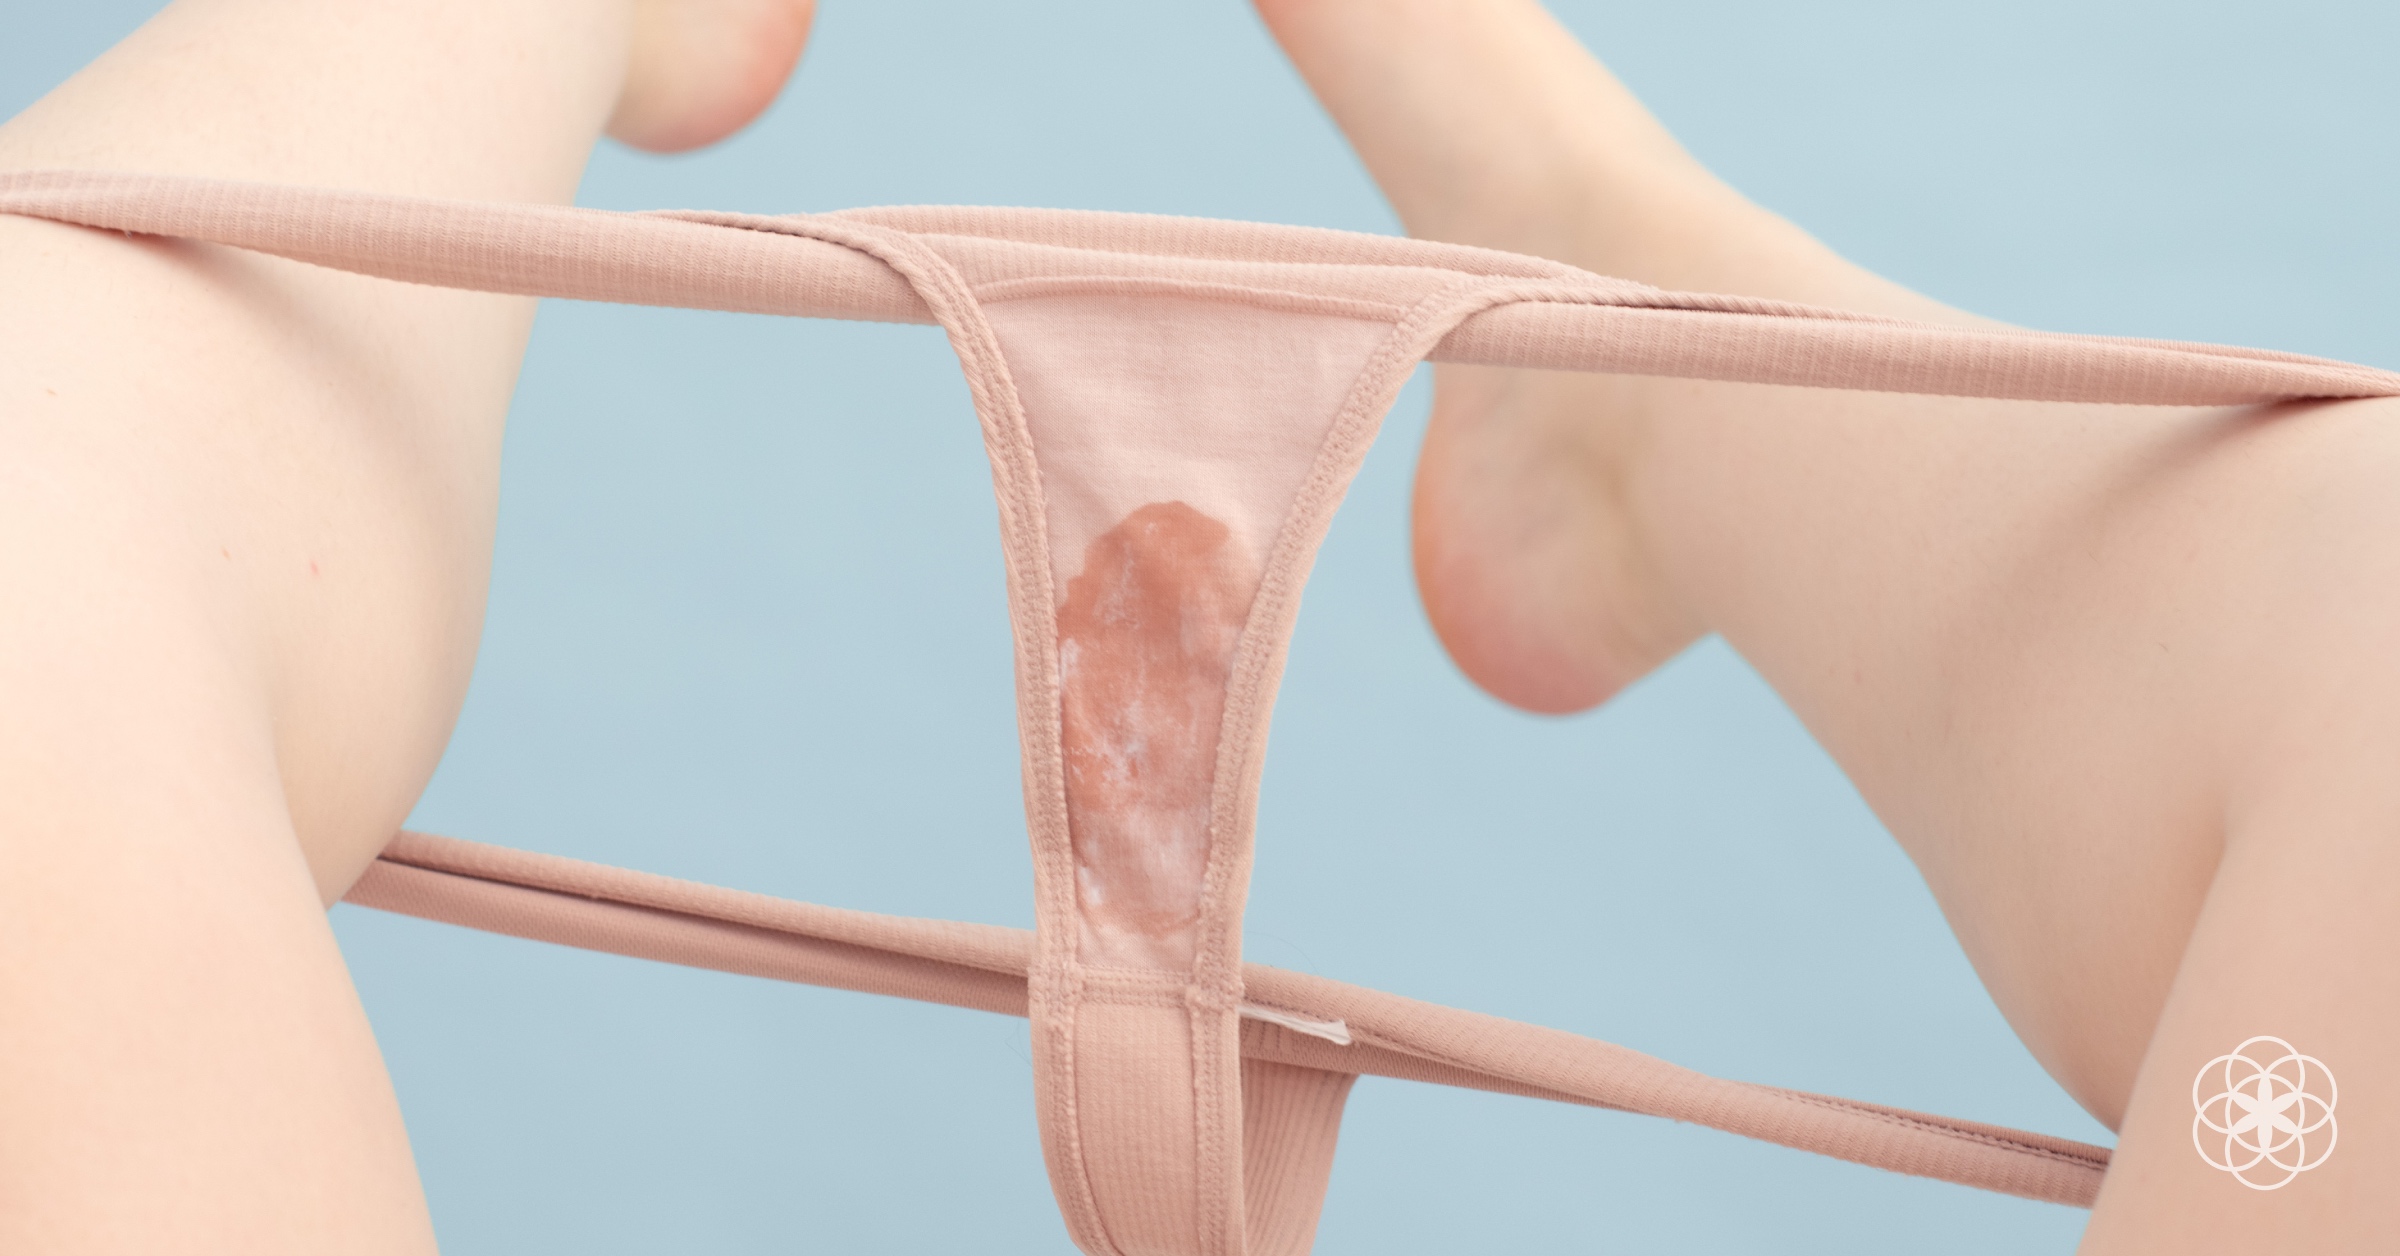 Underwear hygiene: 3 vaginal fluids you must know about